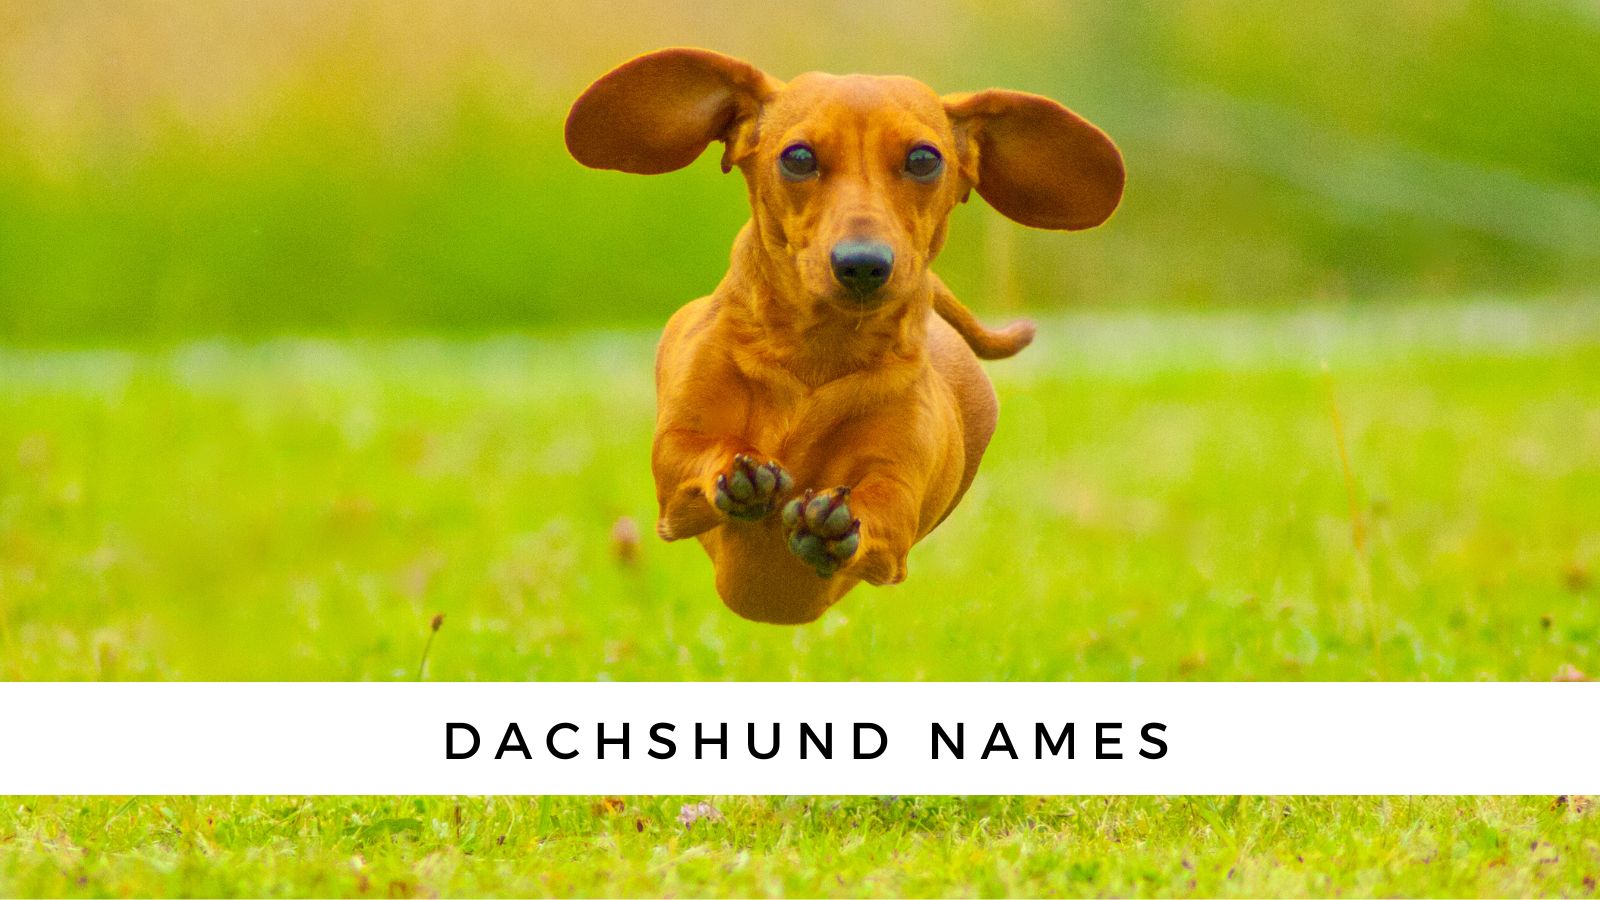 200+ Dachshund Names For Your Sausage Dog! (2023)